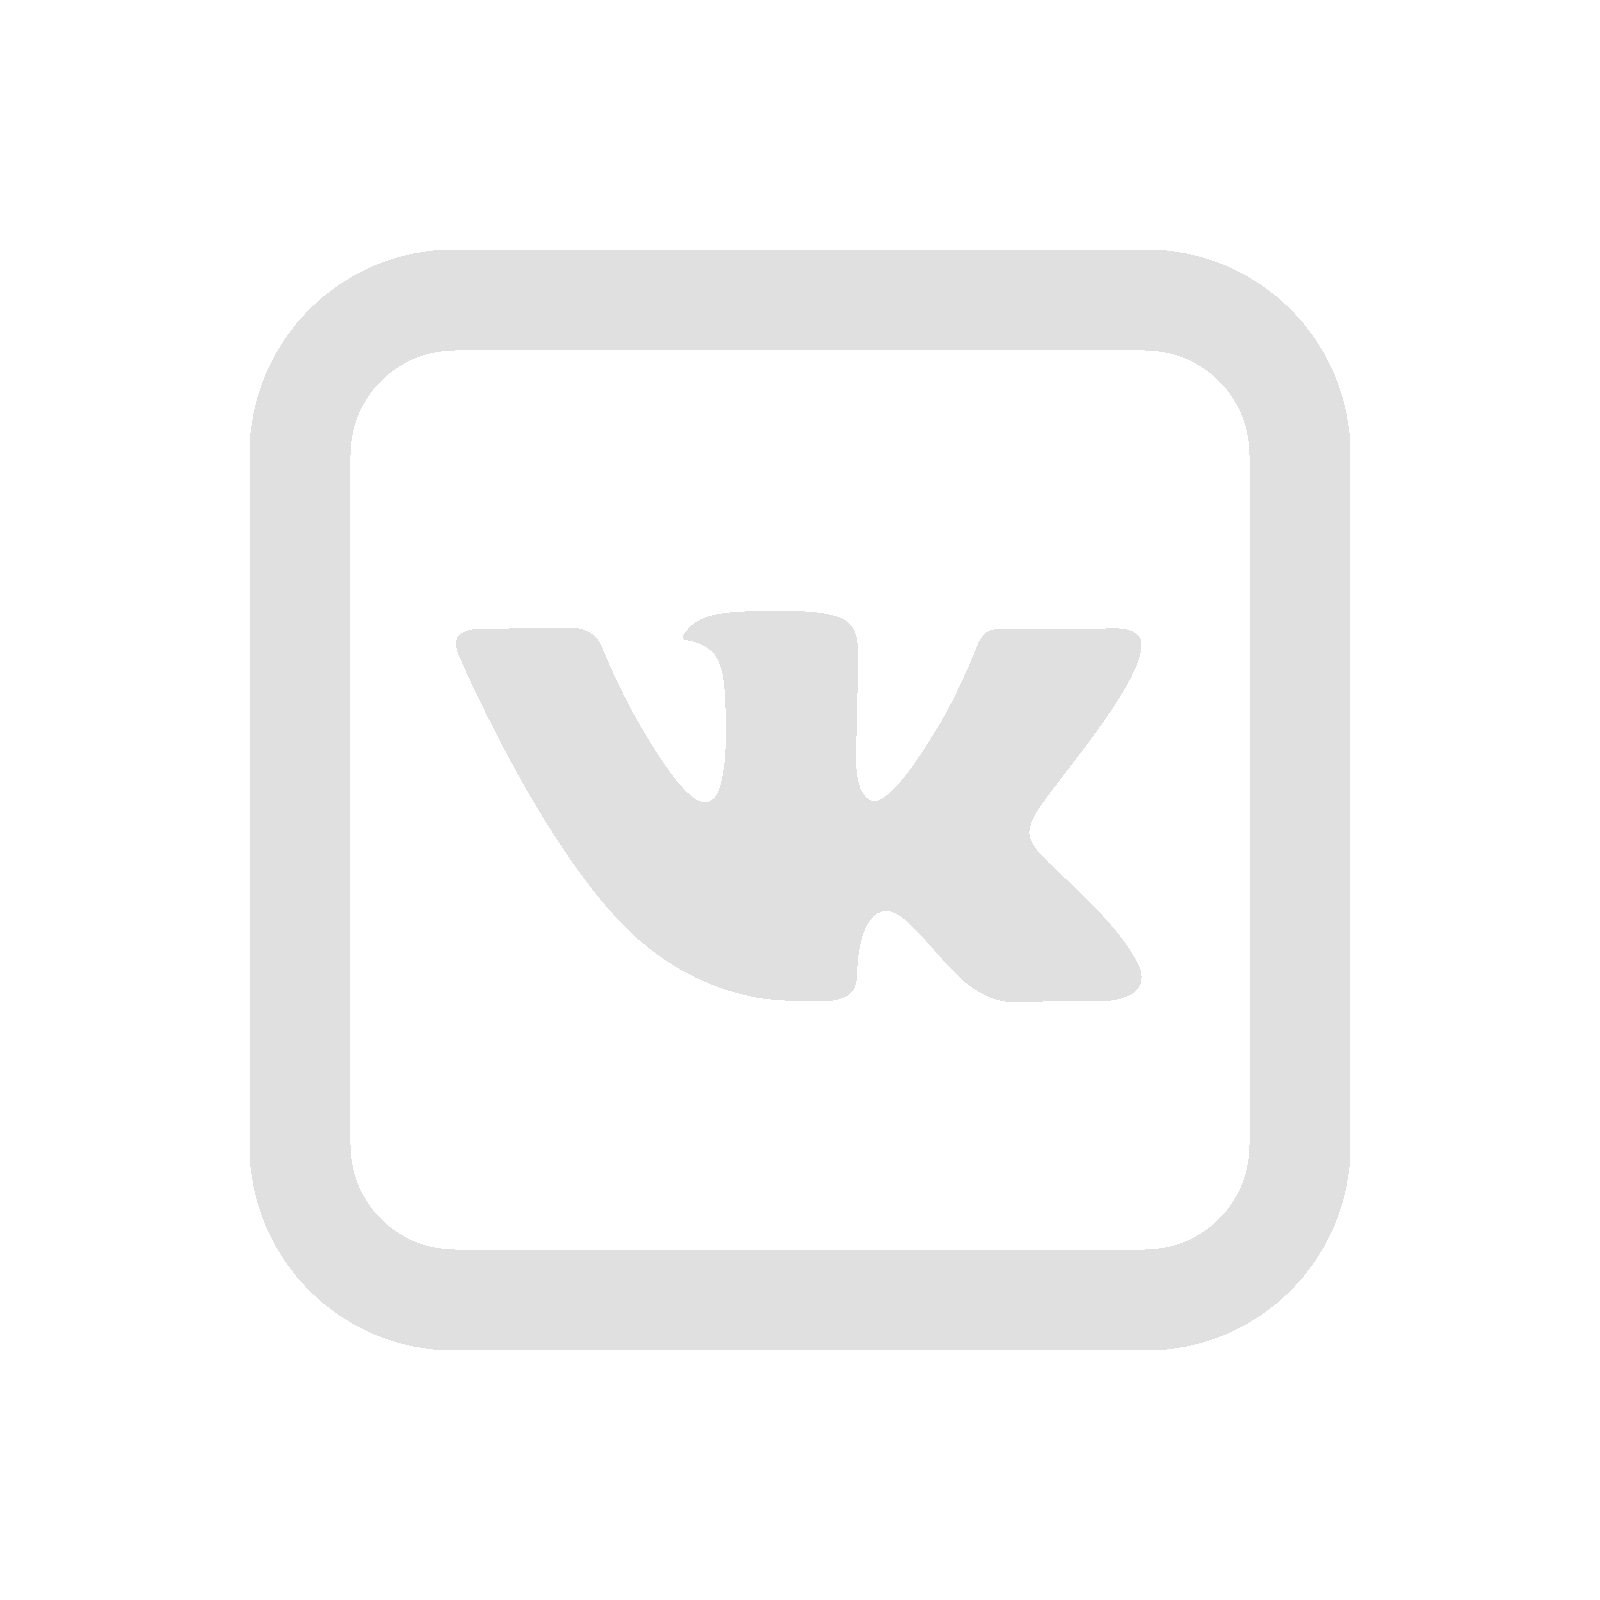 Vk com oge100ballov. Логотип ВК. Значок ВК белый. Прозрачный значок ВК. Значок мл.